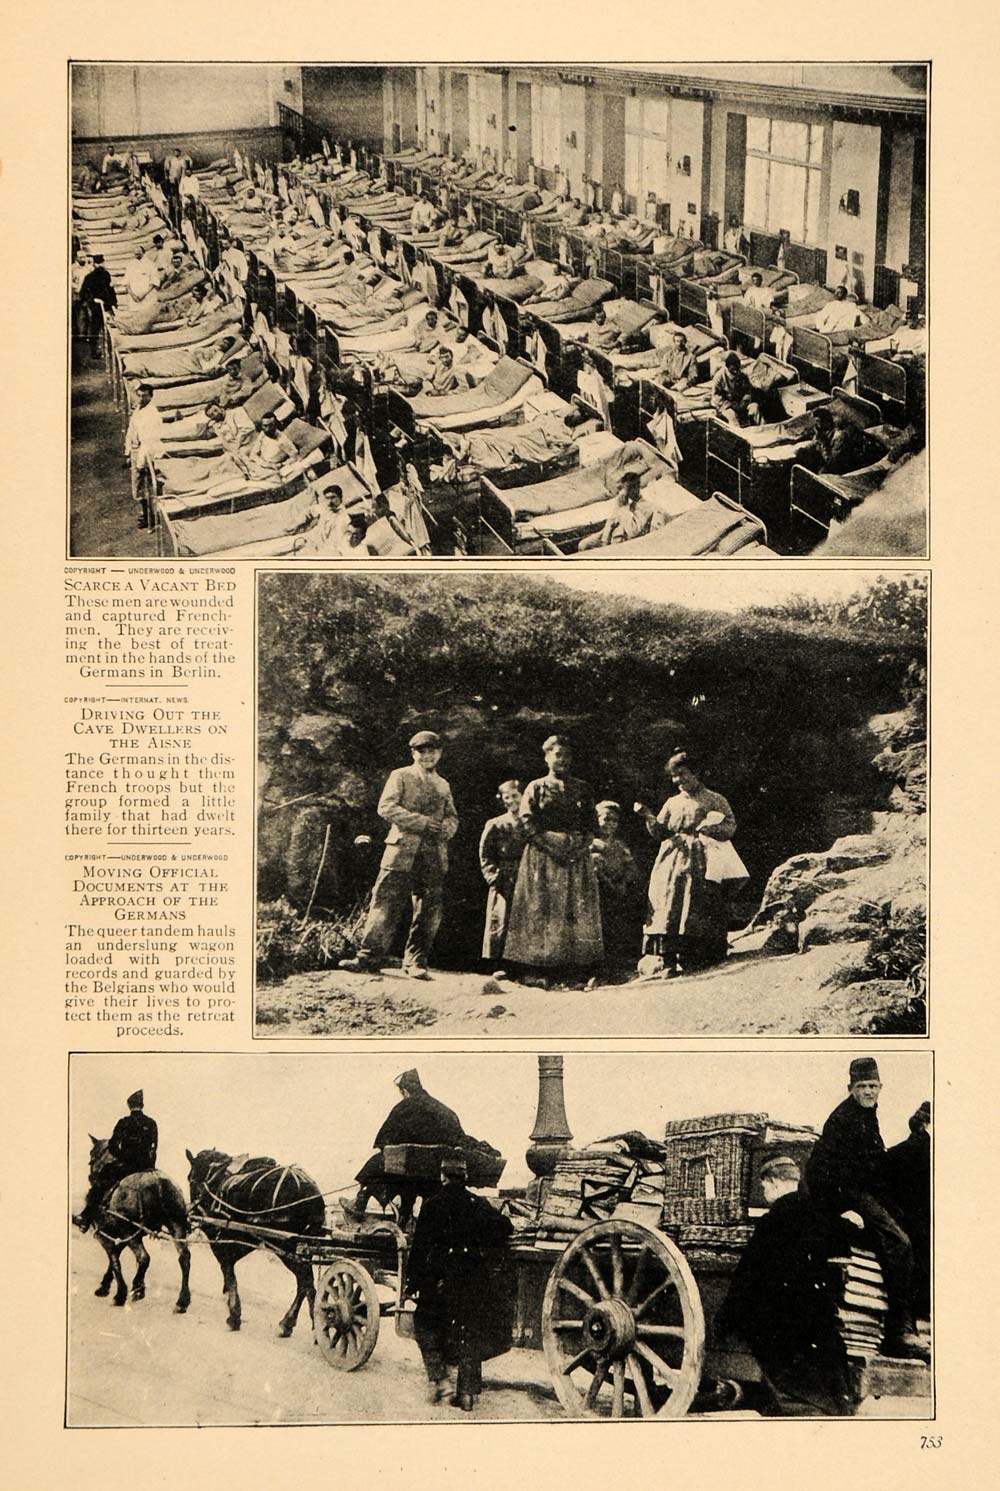 1915 Print World War I Armies Destruction Battlefields ORIGINAL HISTORIC TW2